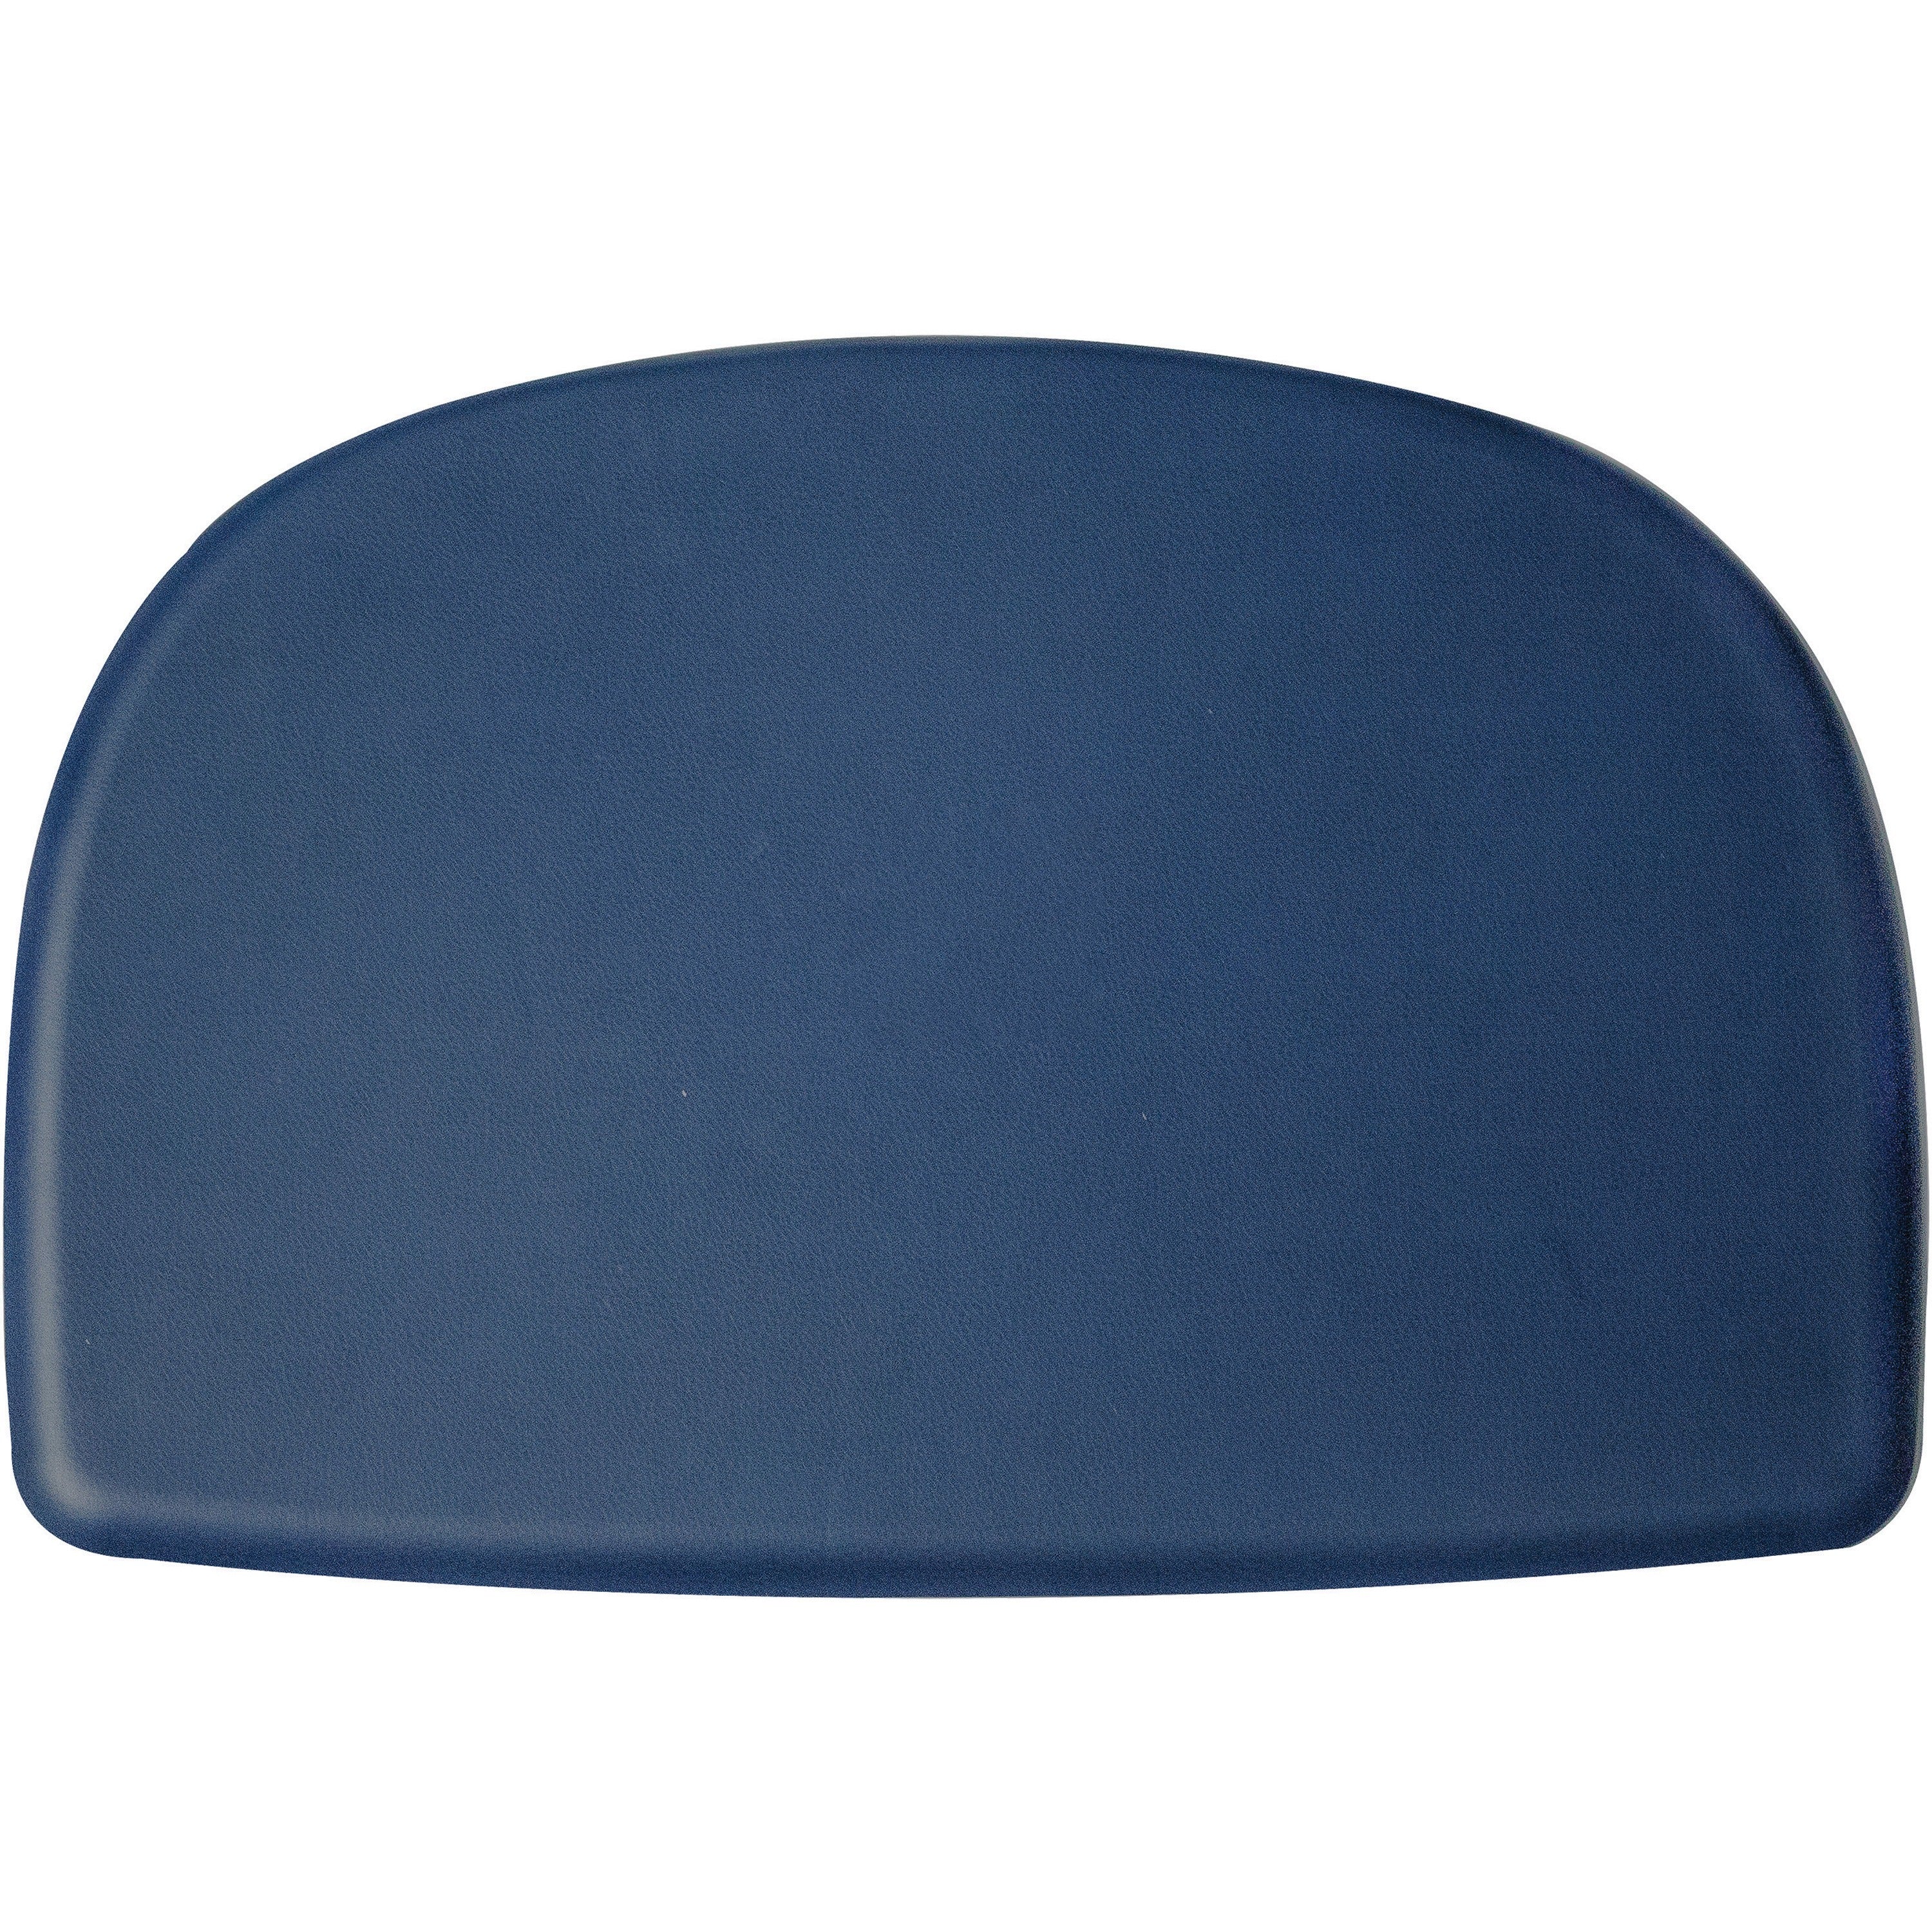 hon-skip-seat-cushion-polyurethane-foam-filling-easy-to-clean-comfortable-navy_honskpcushnvy - 1